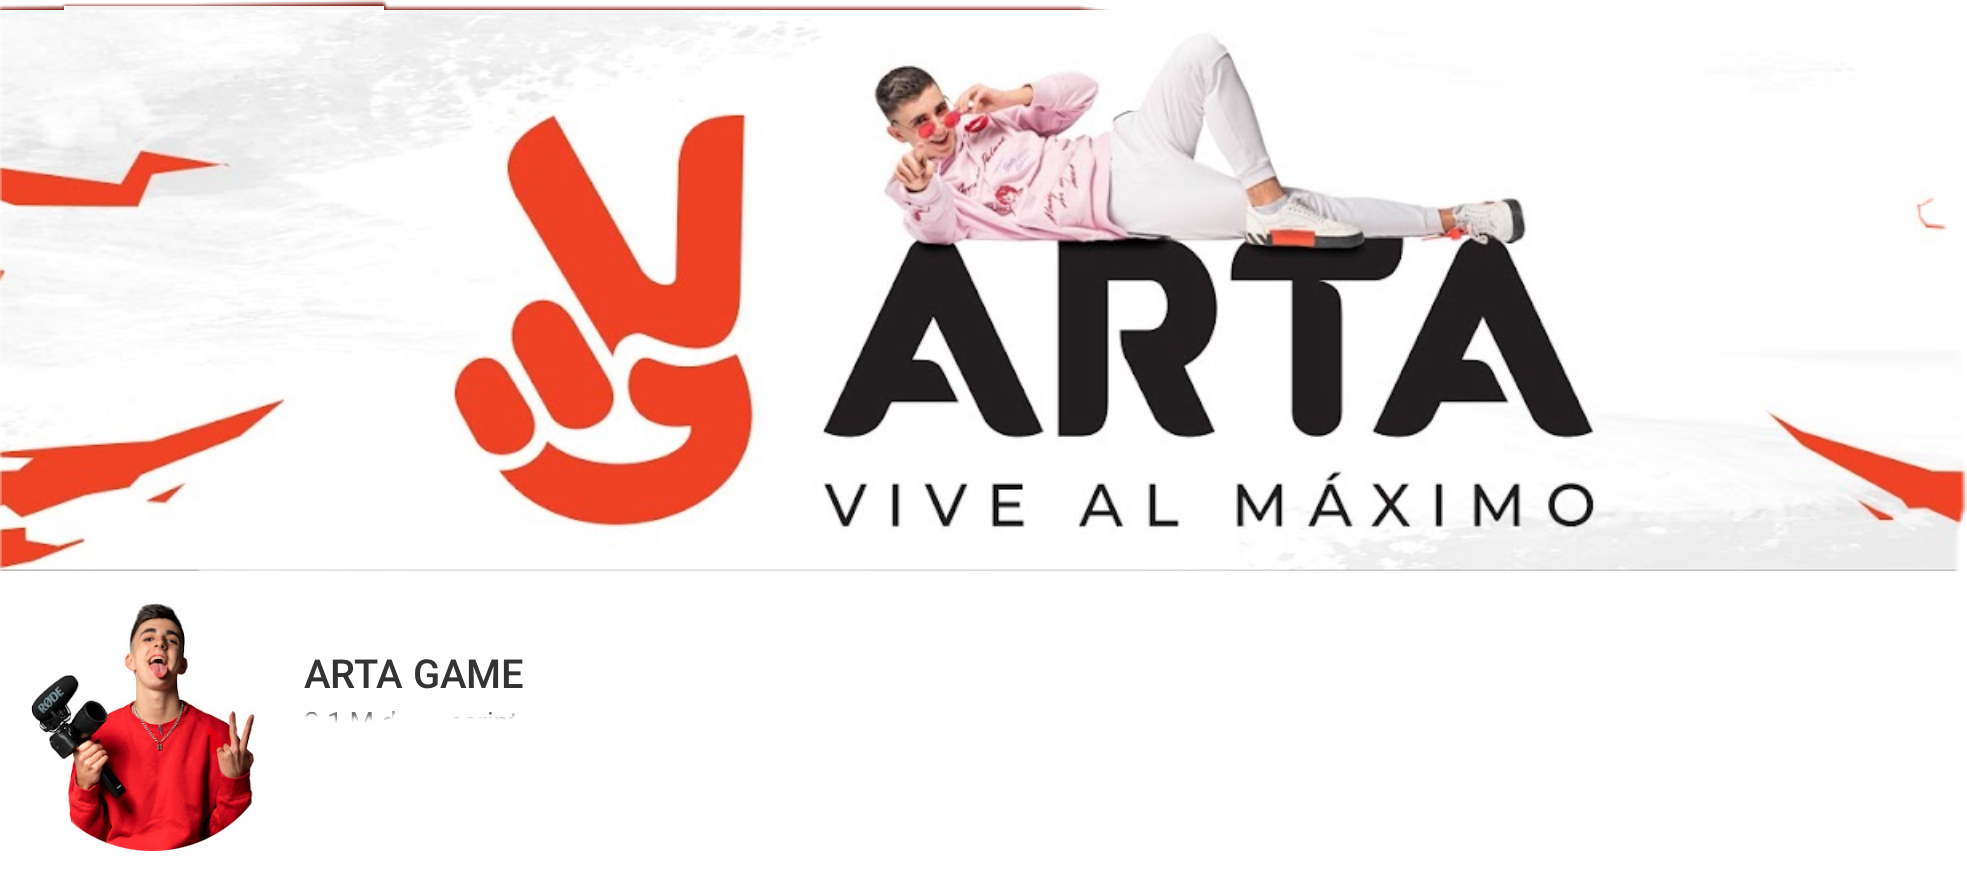 arta freetoedit #arta sticker by @lalitodelmundo